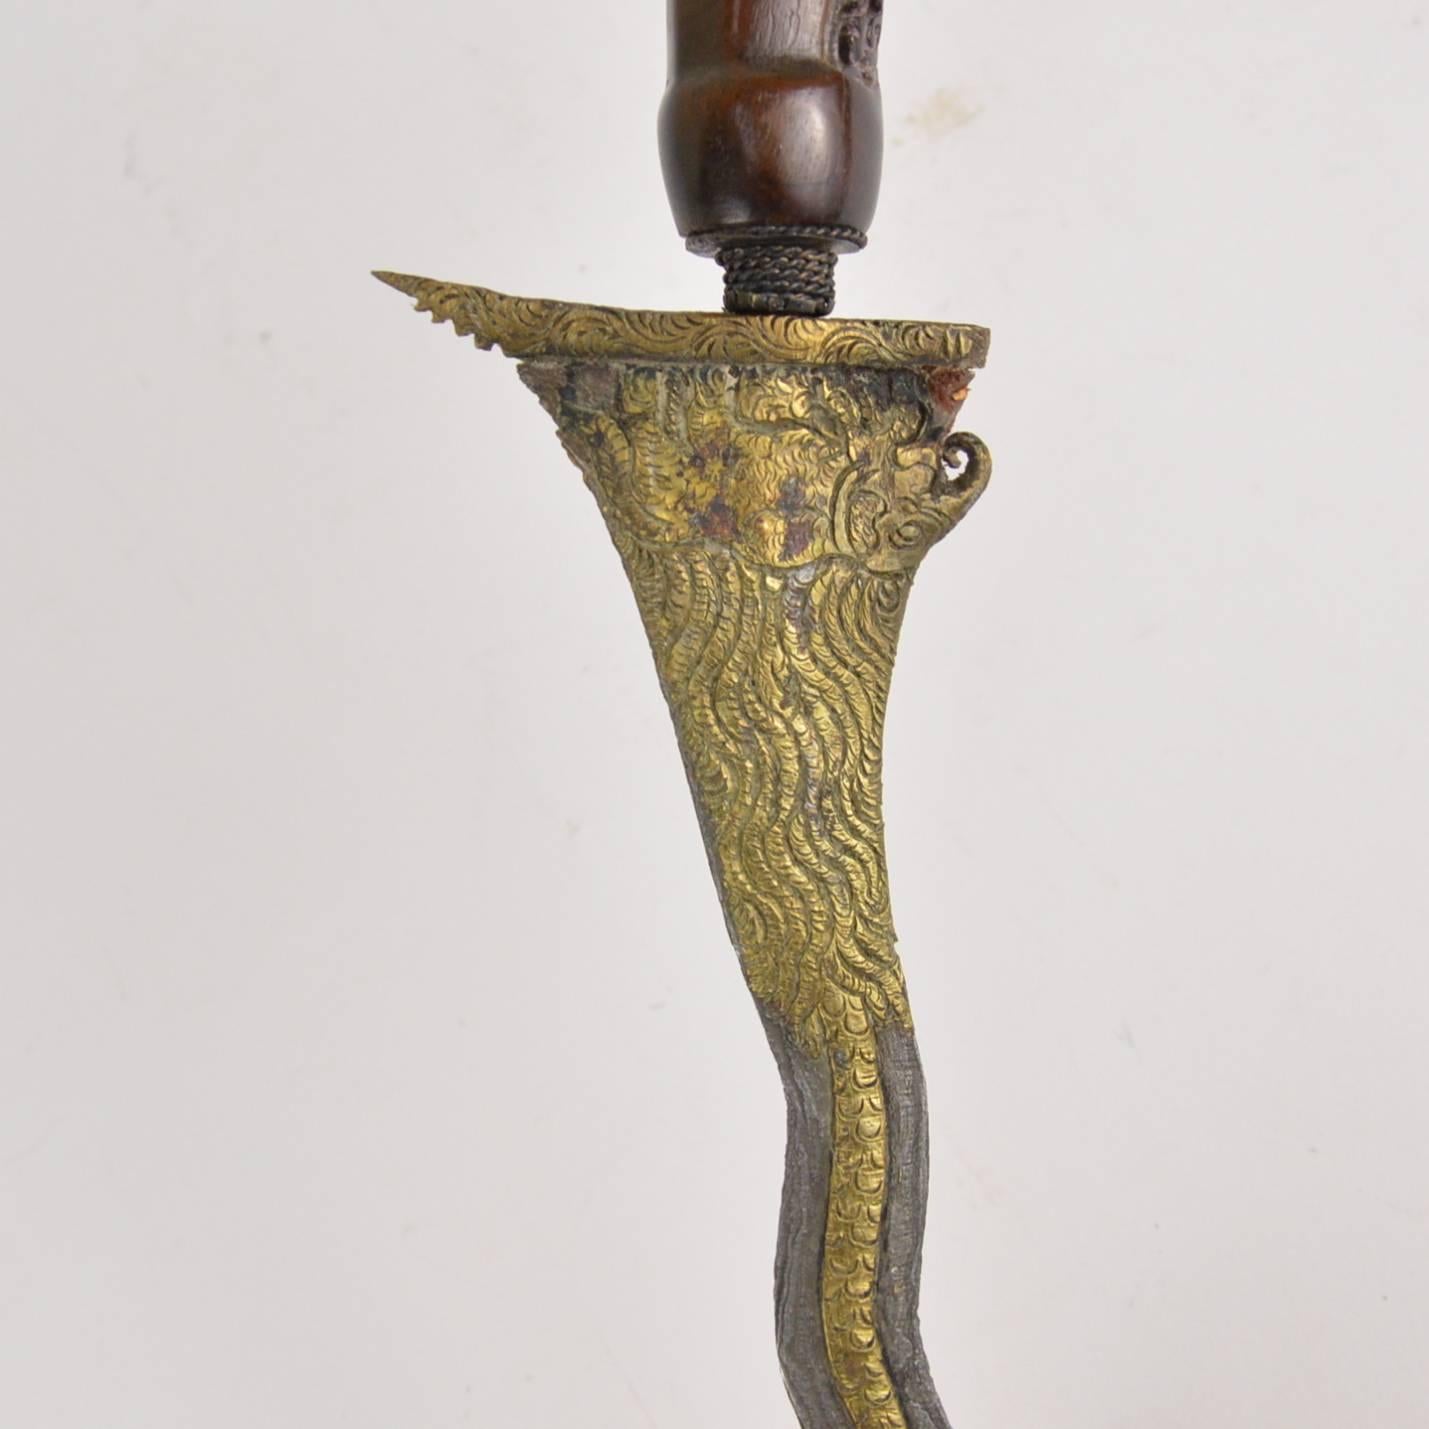 Bronze Antique Indonesian Kris Dagger with Wooden Handle